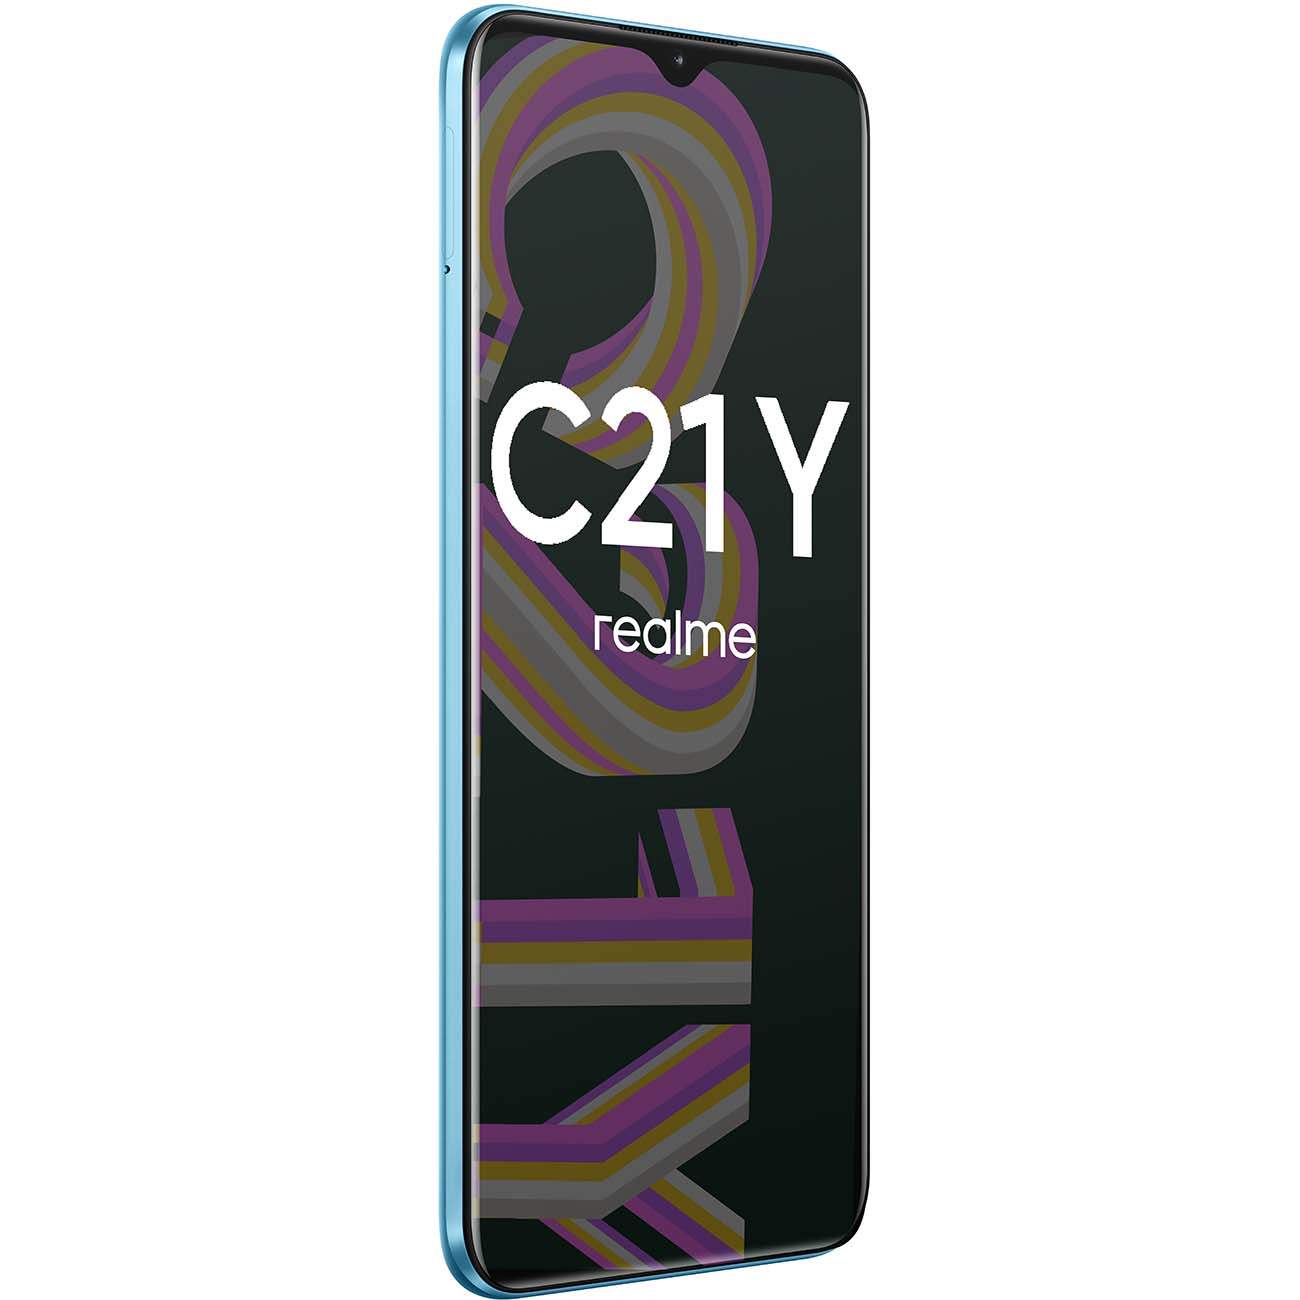 Смартфон Realme C21-Y 3/32GB Cross Blue (RMX3263) - отзывы покупателей на  маркетплейсе Мегамаркет | Артикул: 100029670599